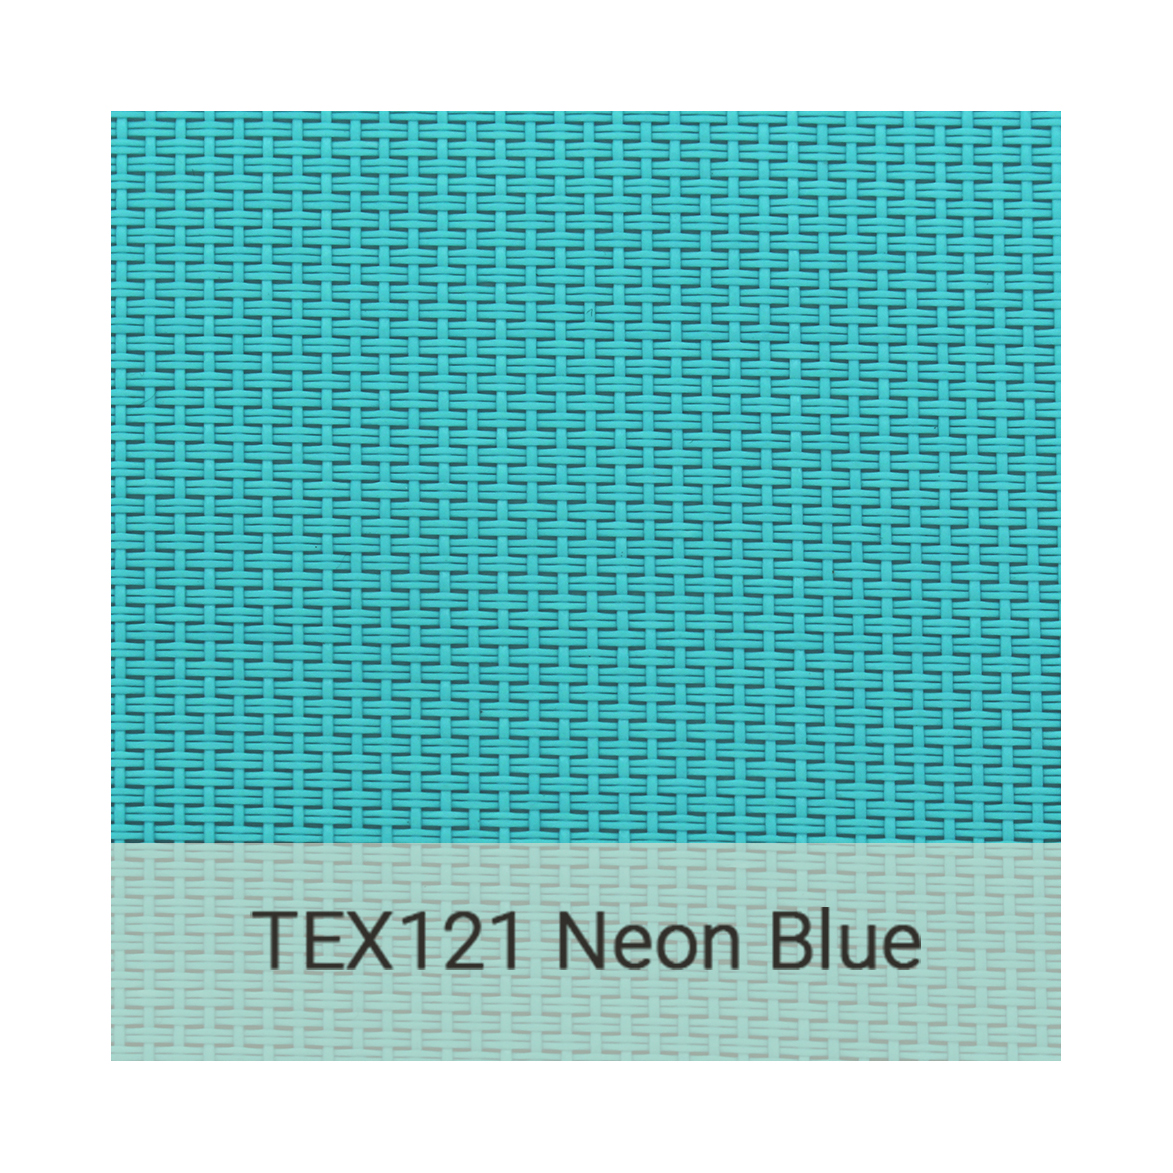 Kingston Casual textiline-tex121-neon-blue